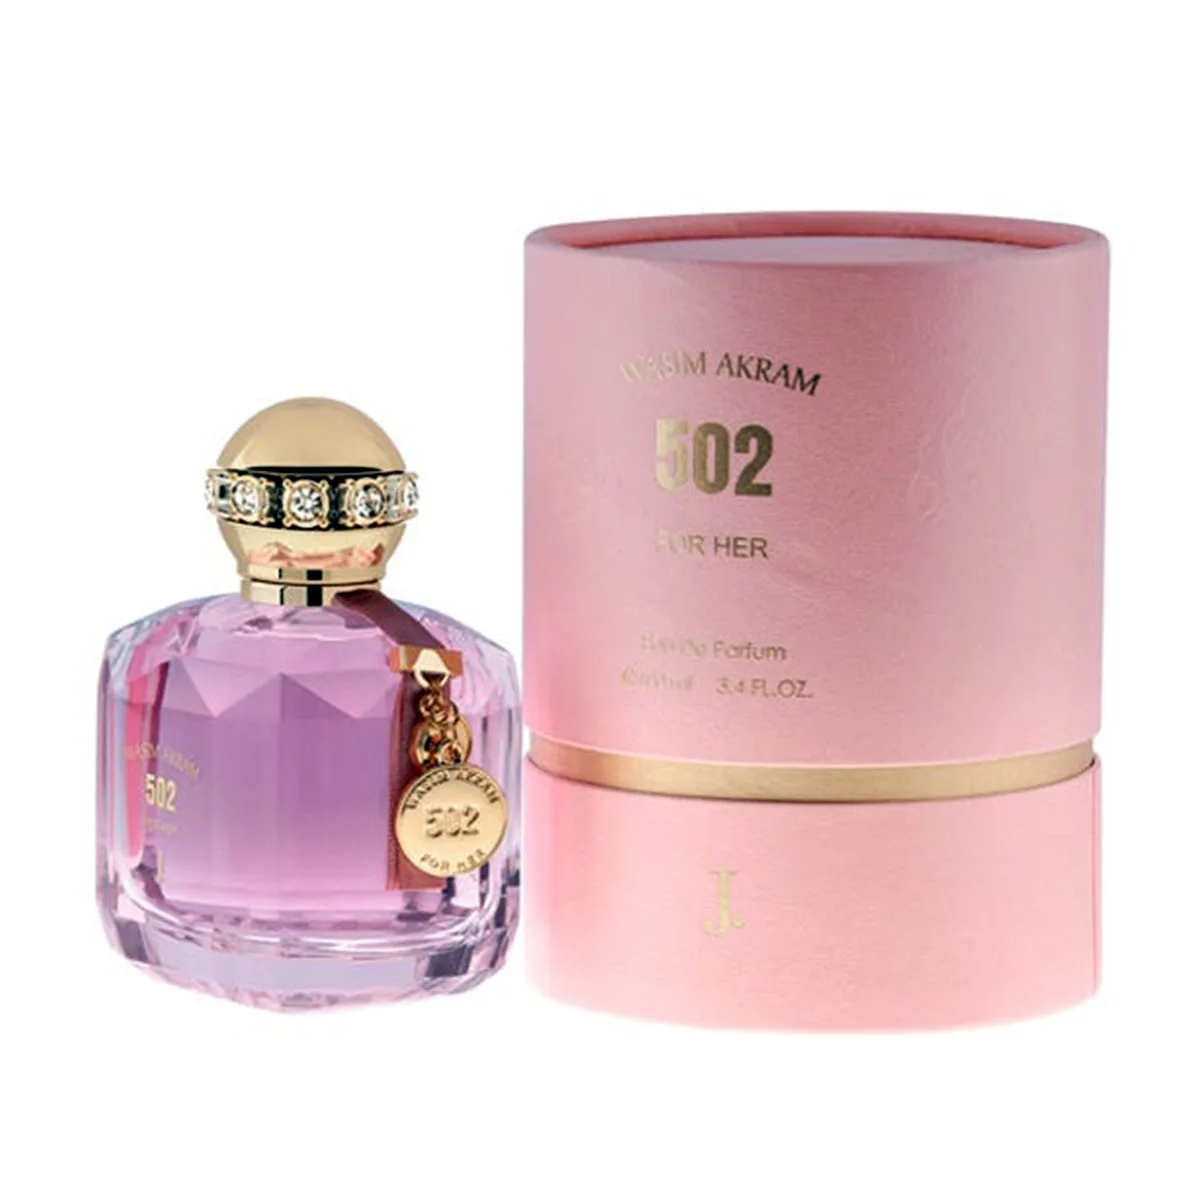 Wasim Akram 502 Perfume Review